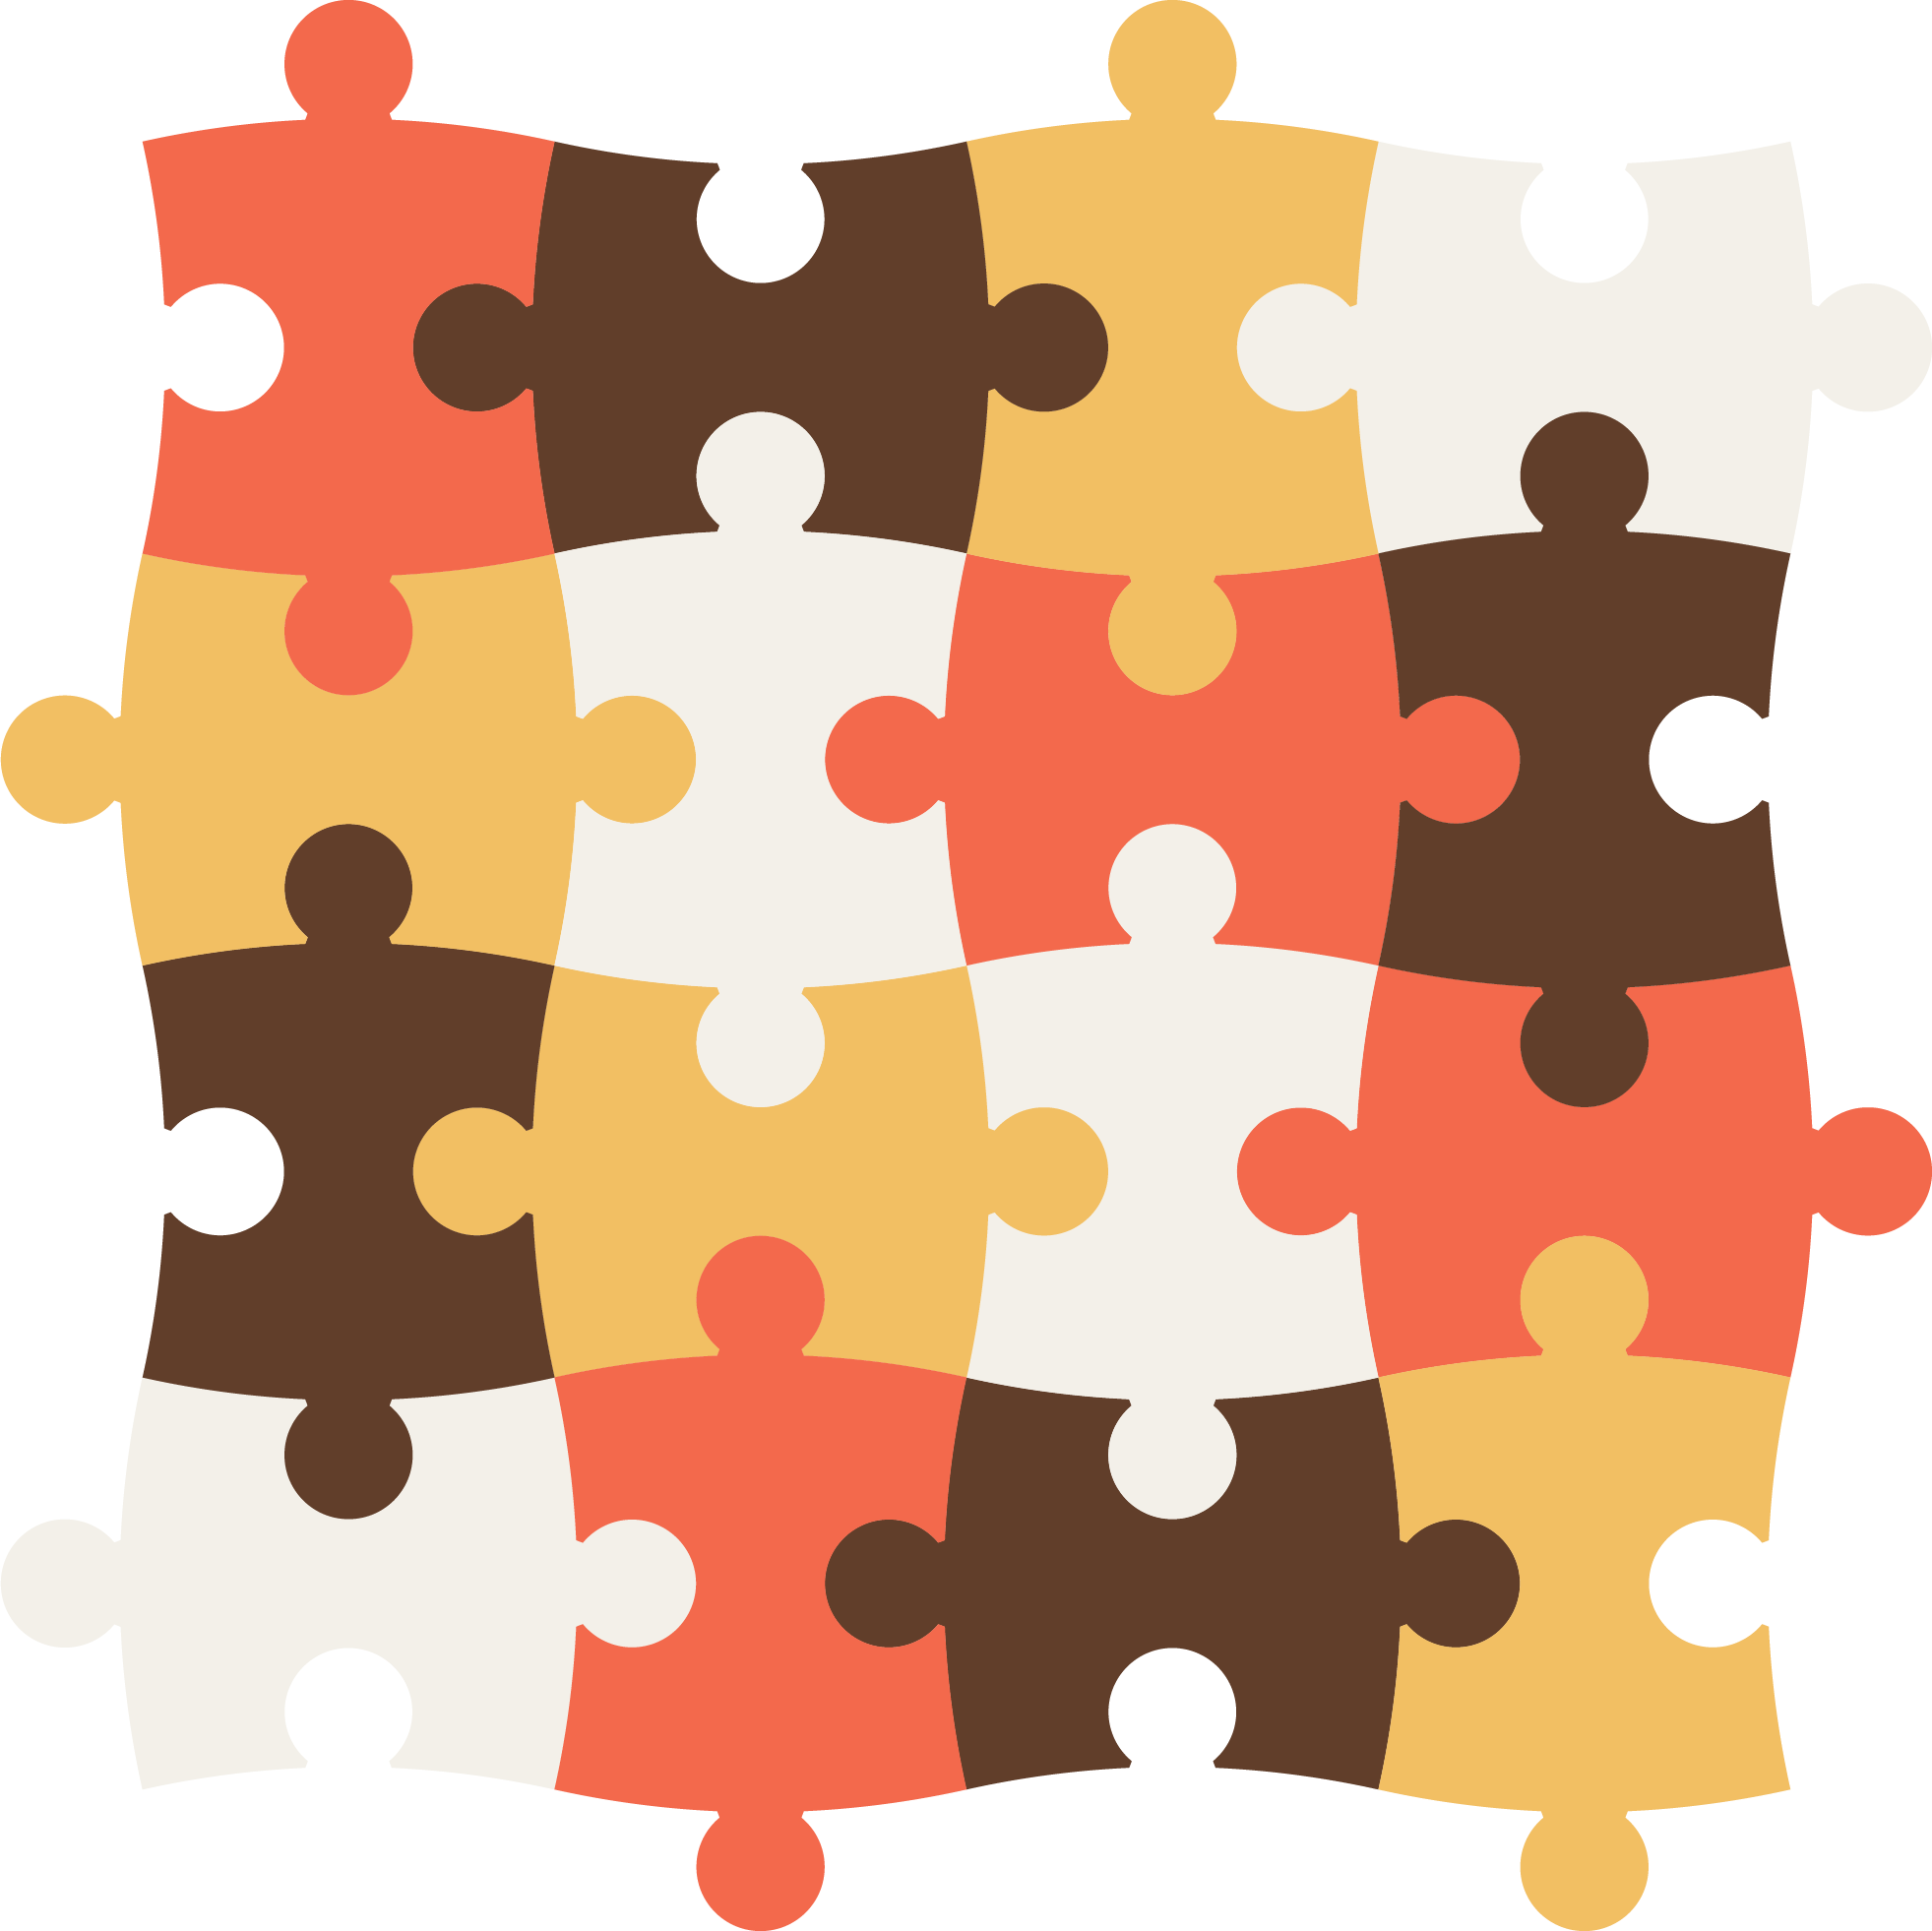 Puzzle clipart orange. Jigsaw png transparent free